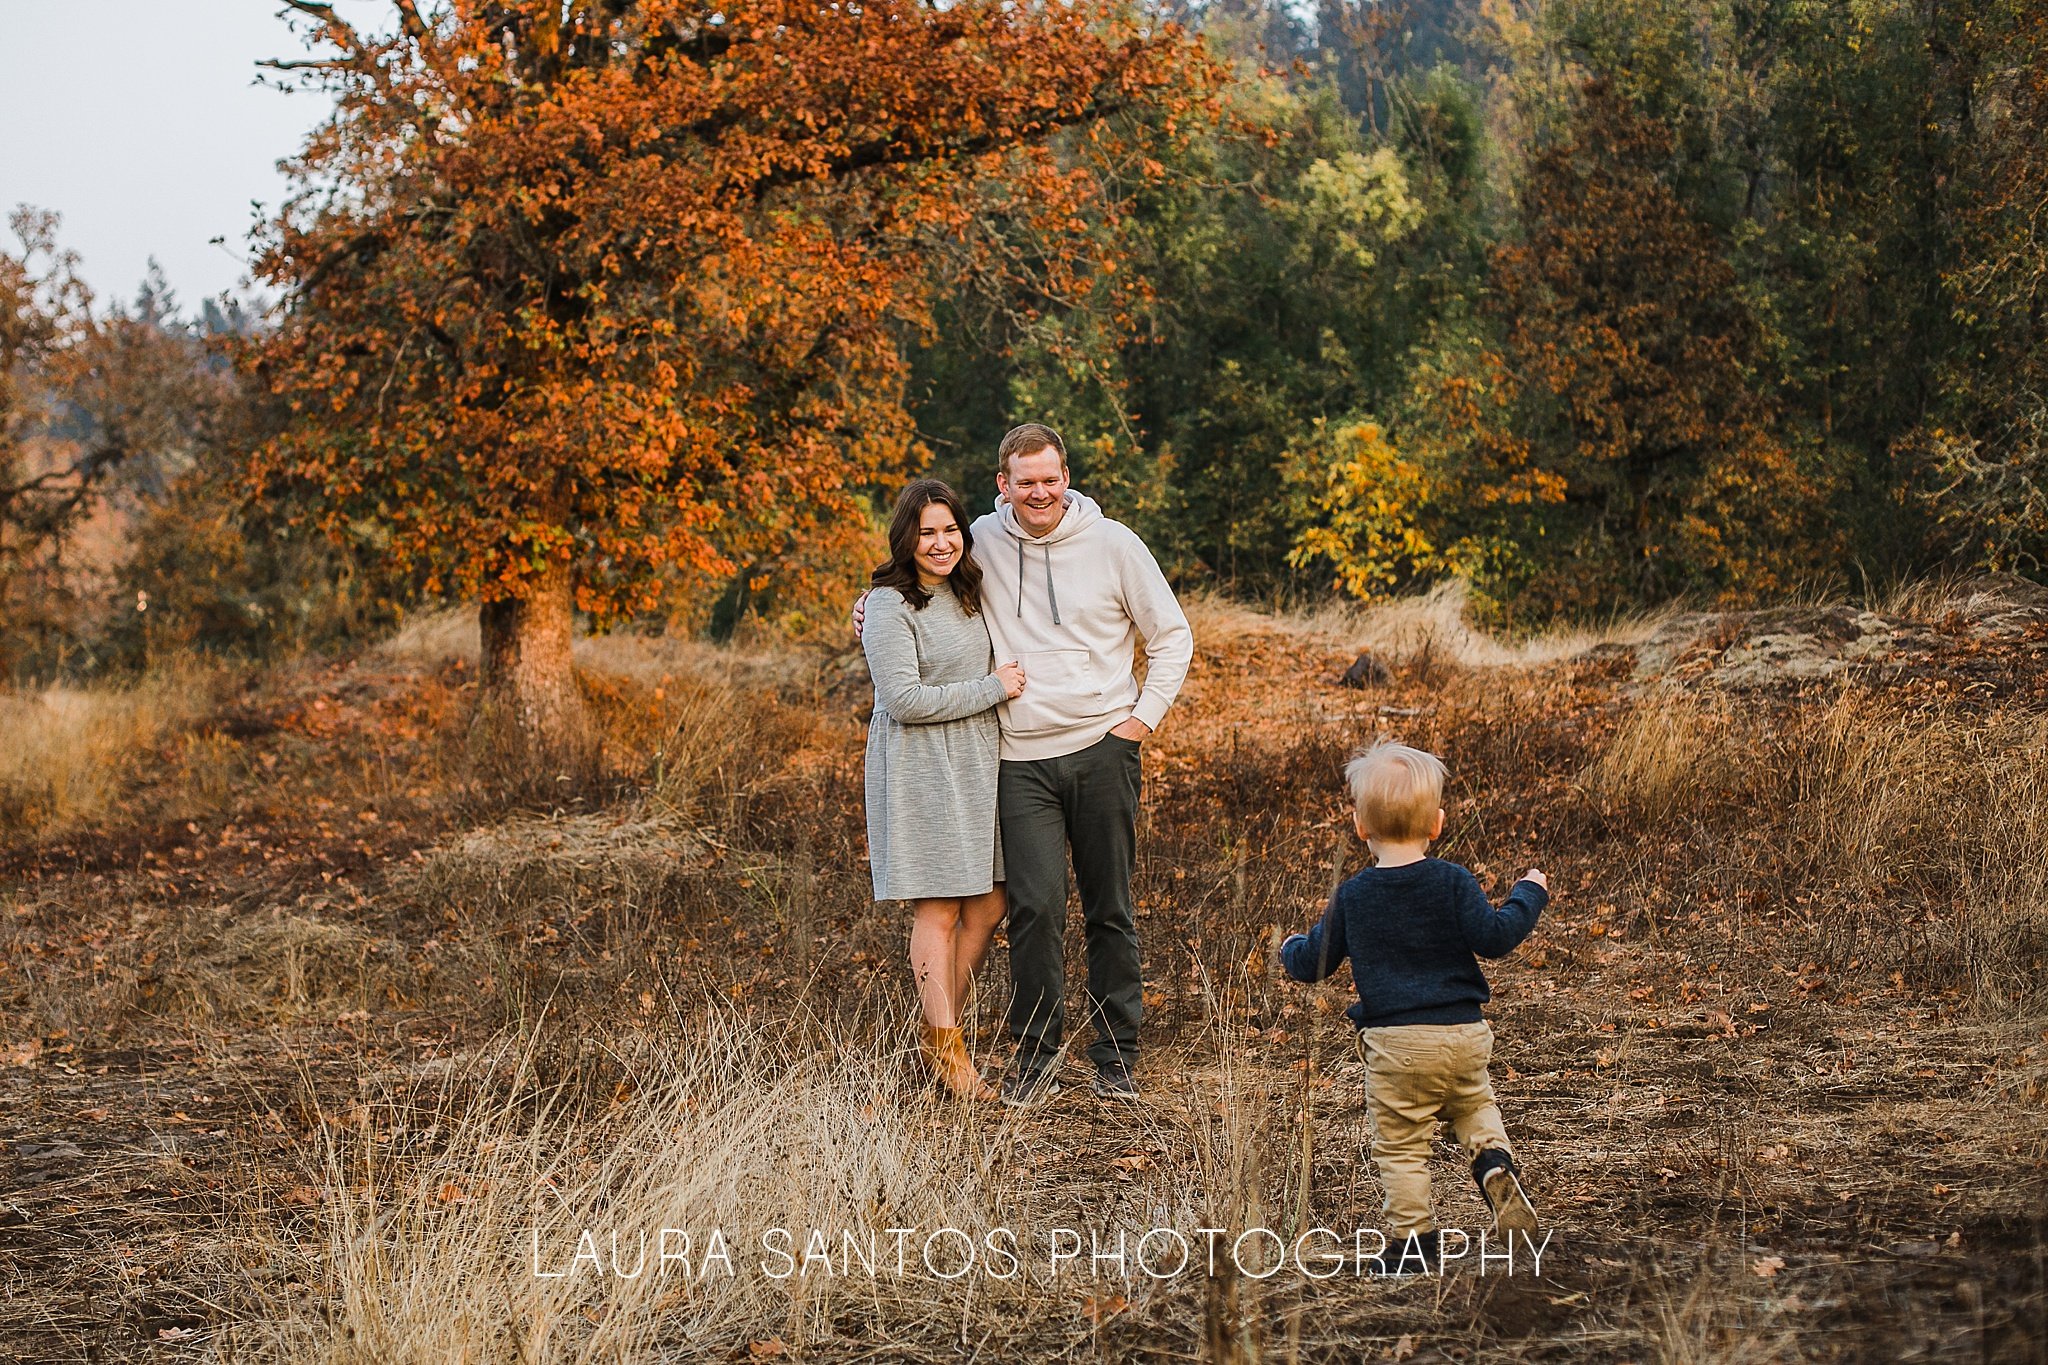 Laura Santos Photography Portland Oregon Family Photographer_3837.jpg